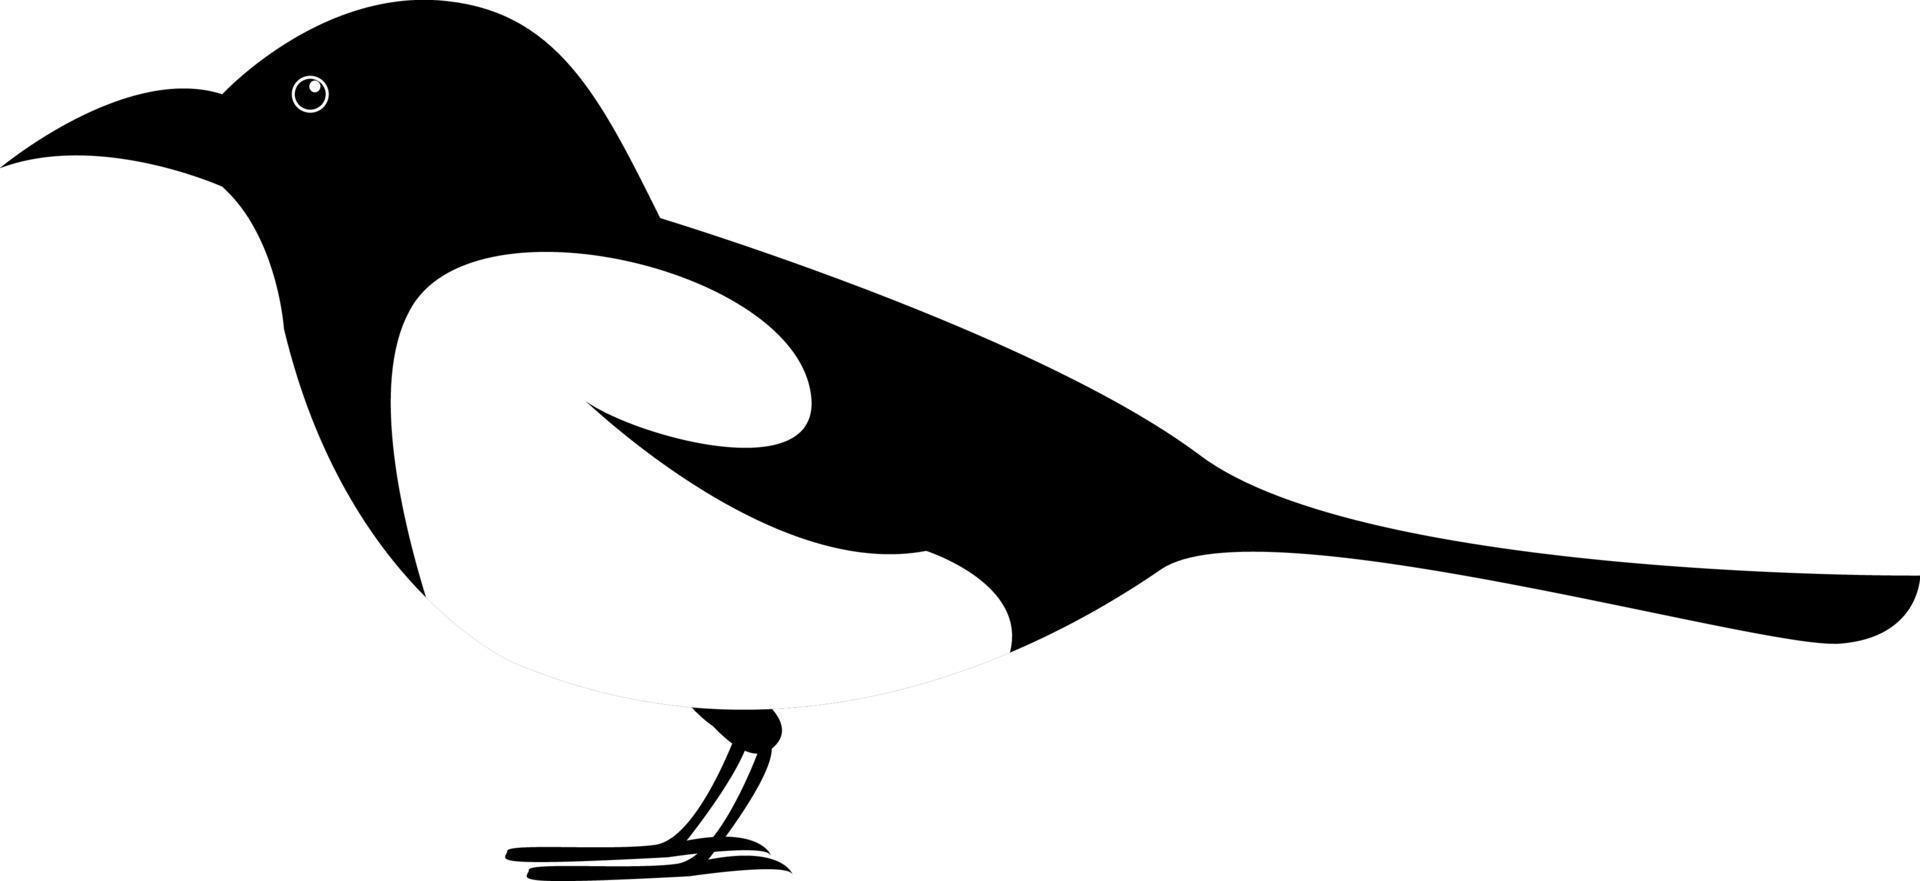 Magpie bird, illustration, vector on white background.